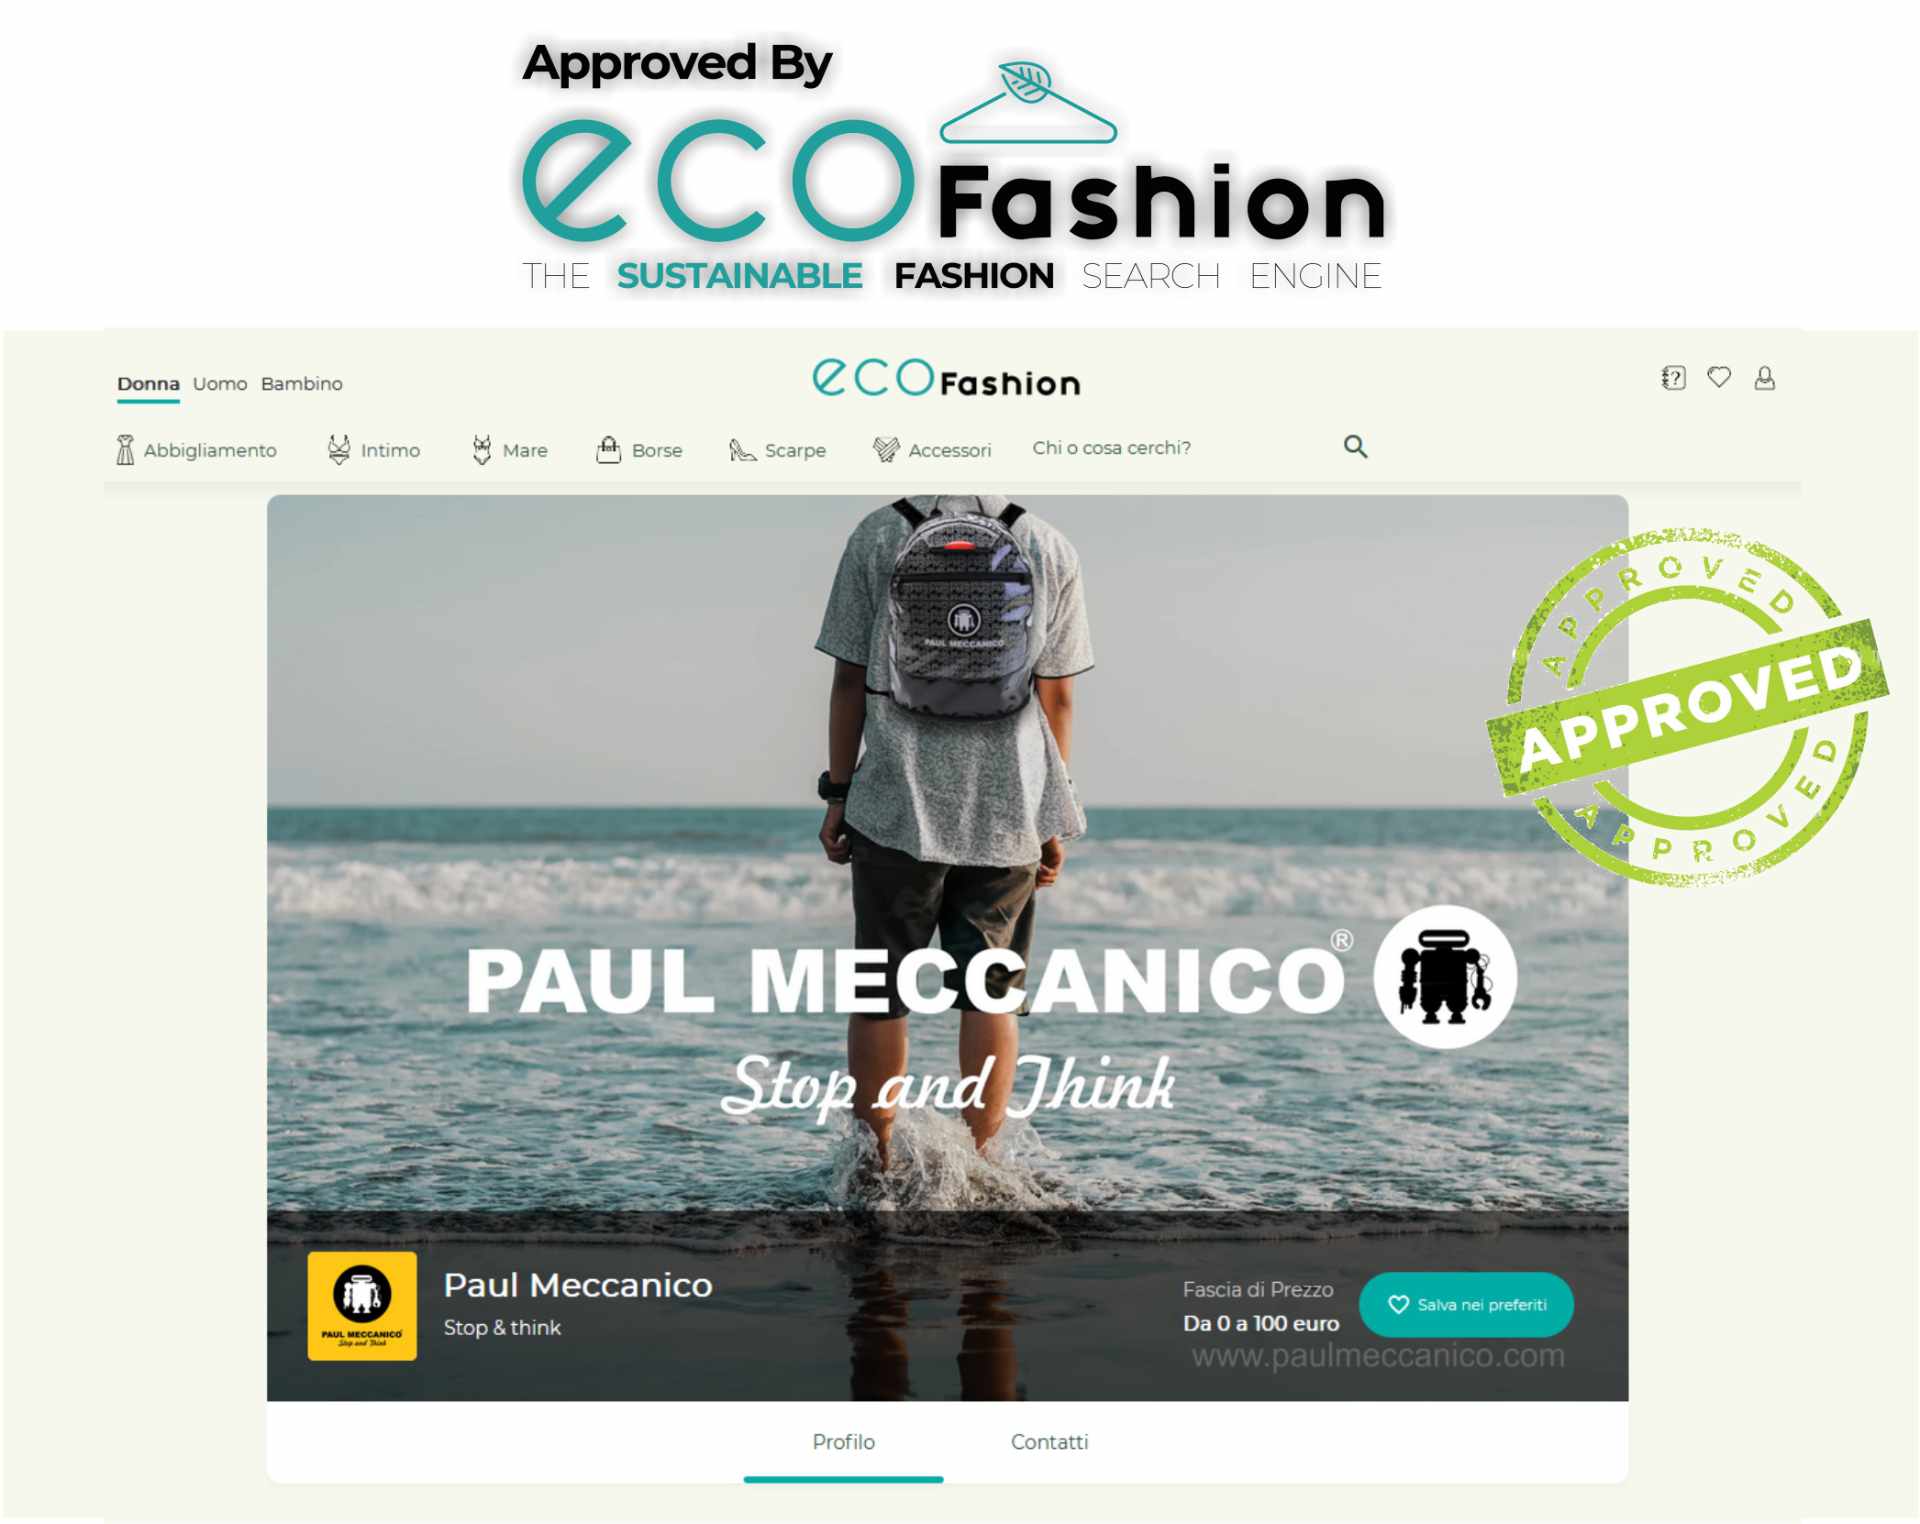 Ecofashion approva Paul Meccanico